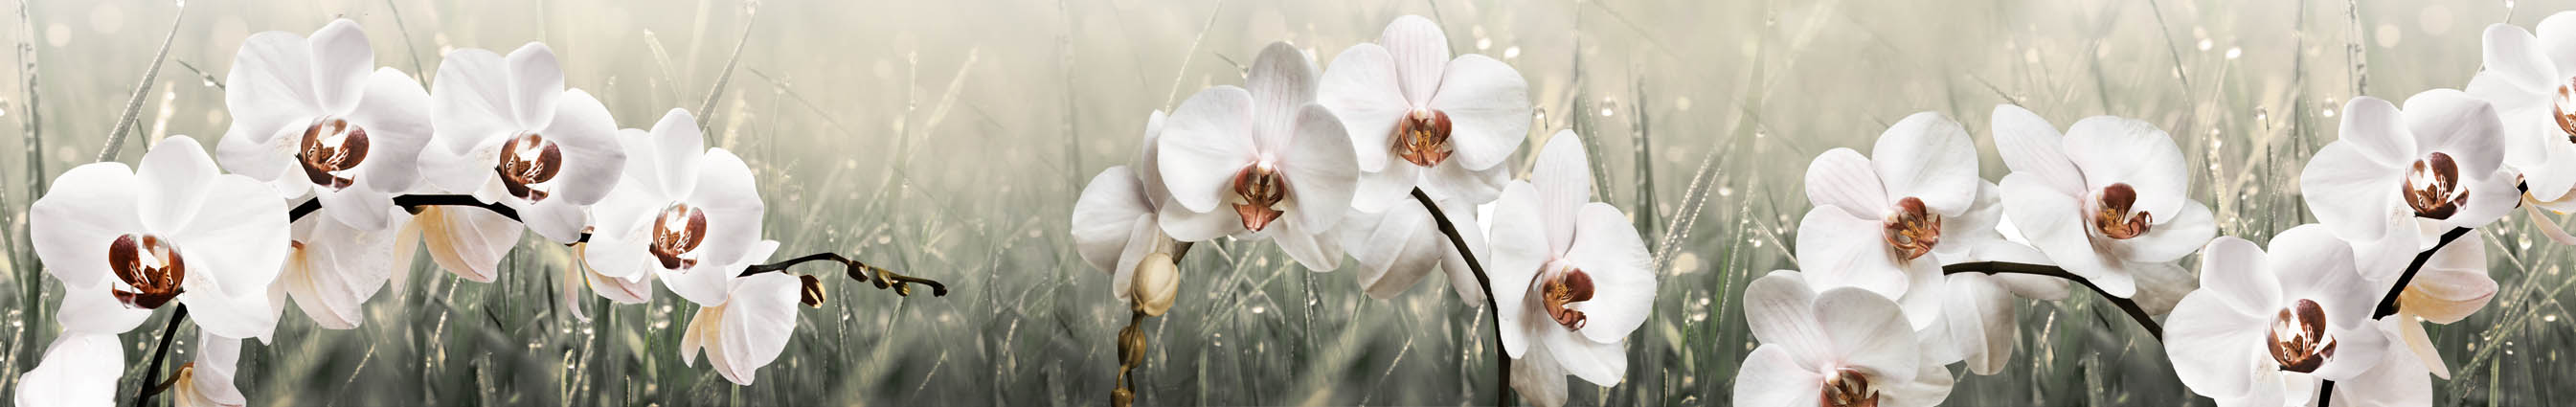 Скинали орхидеи на сером фоне